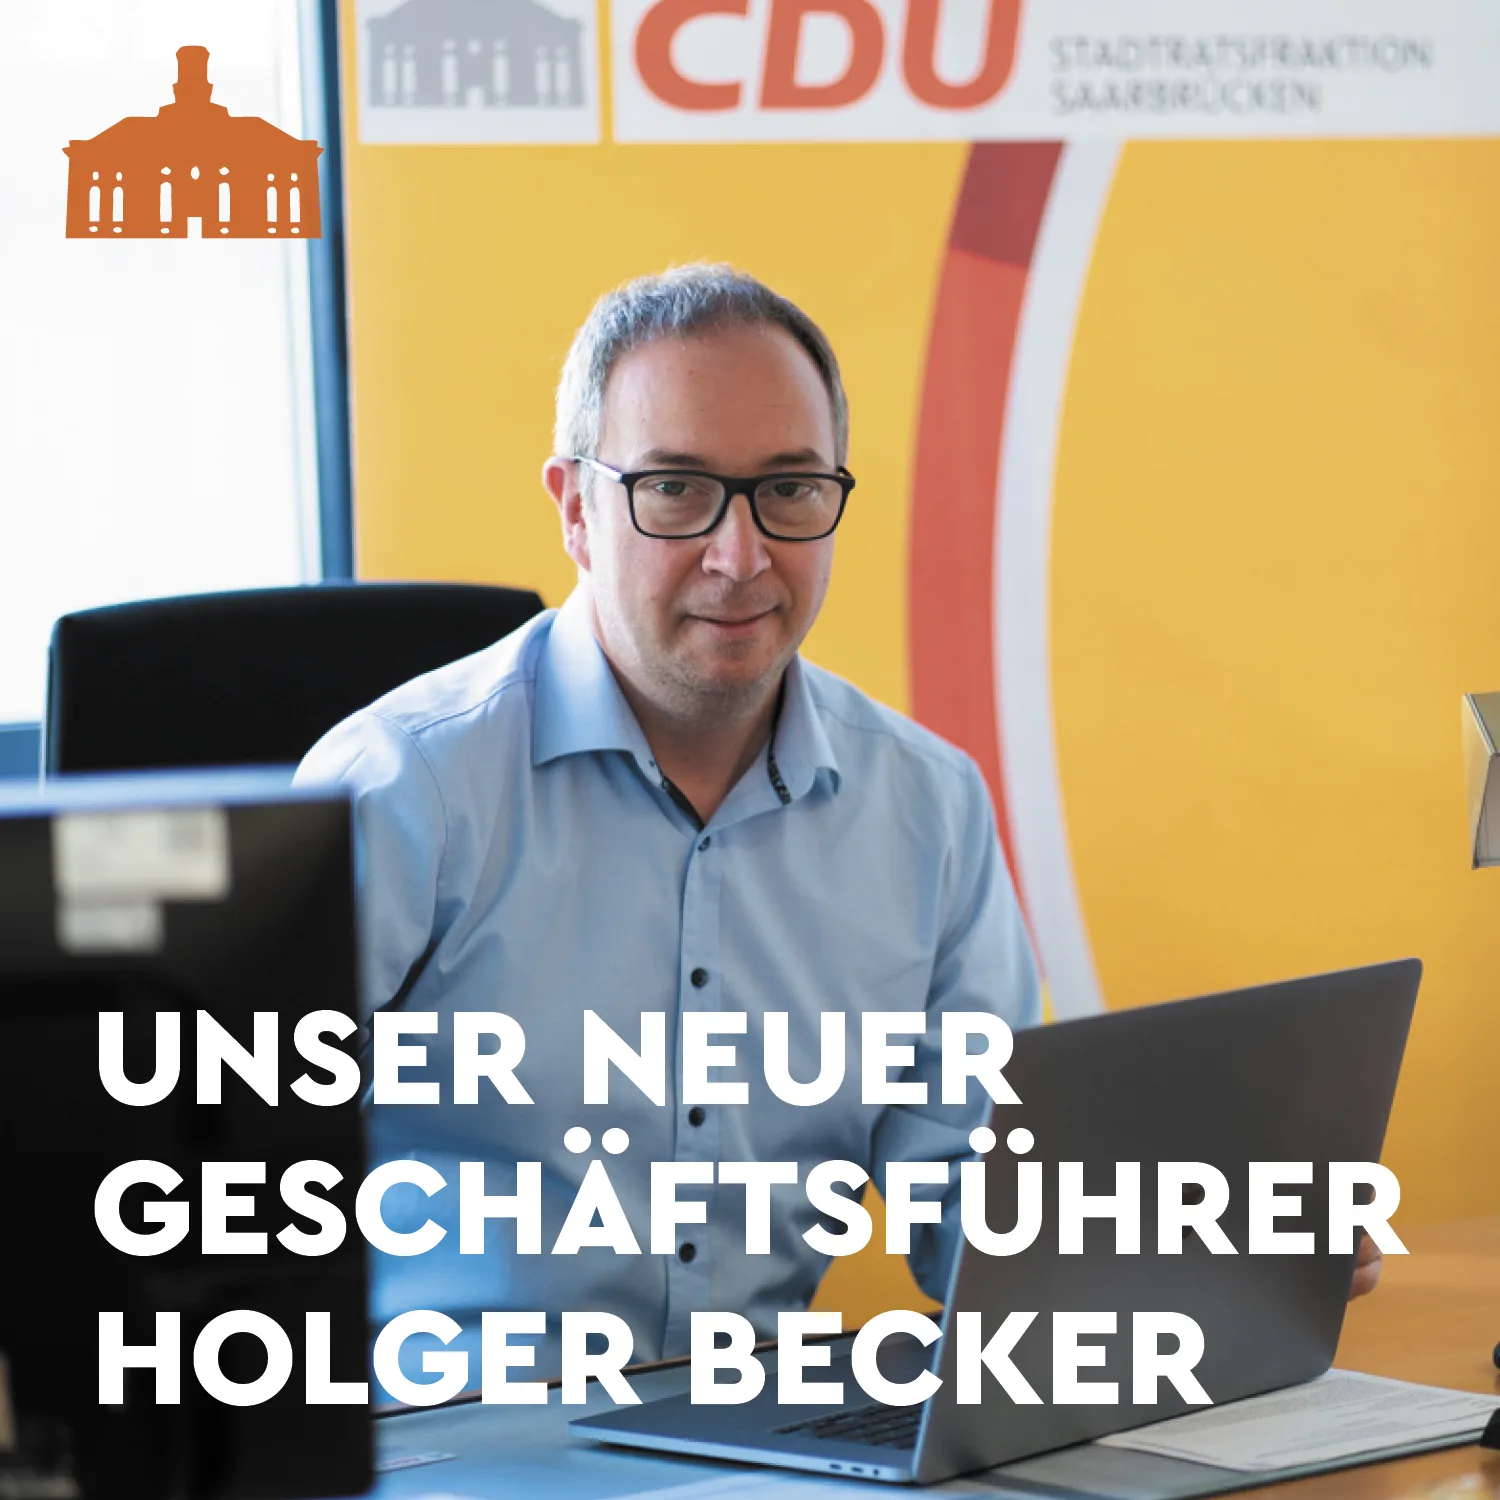 CDU_SOCIAL KACHELN_Holger3